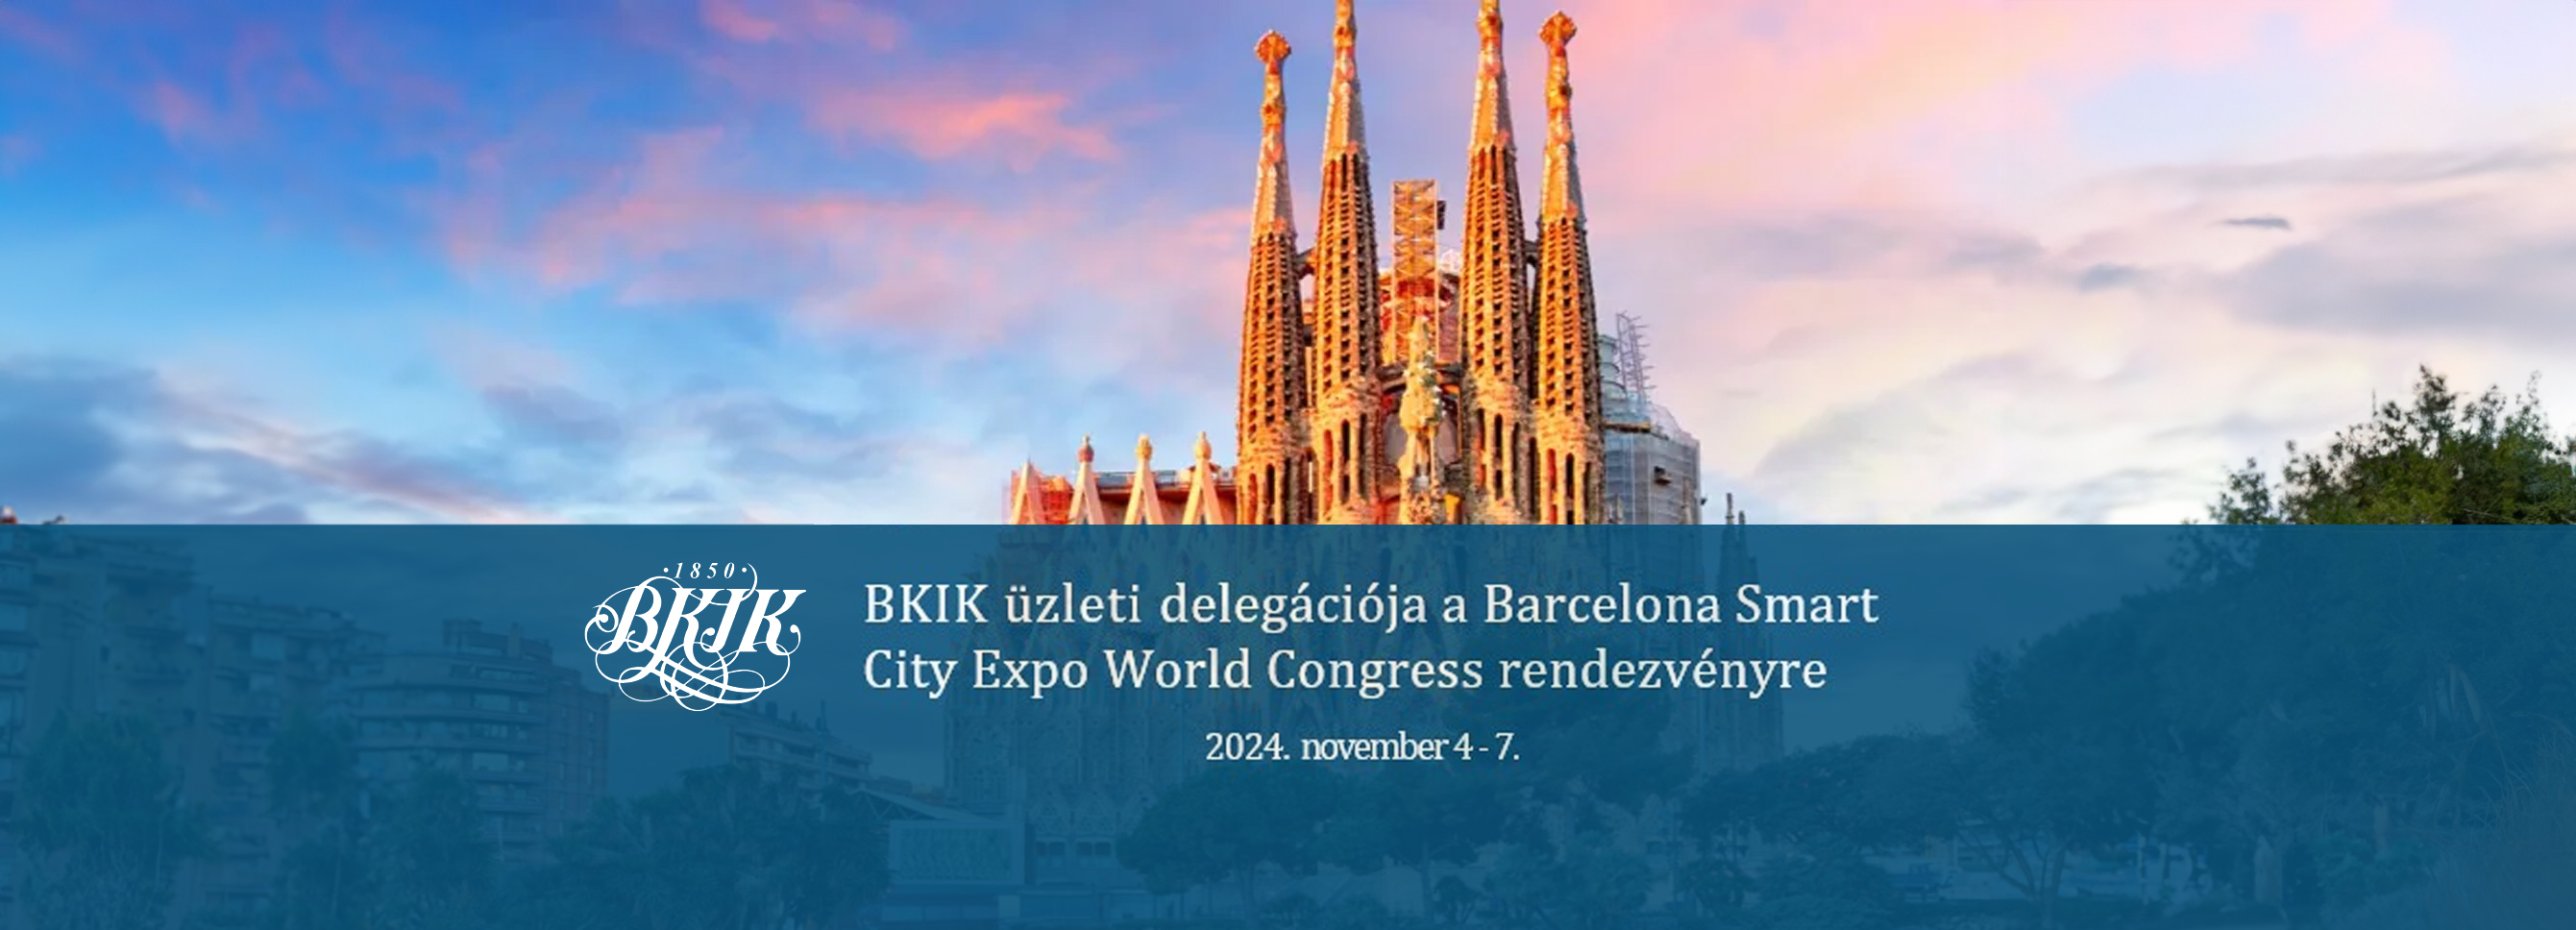 barcelona-smart-city-expo-a-bkik-tamogatott-megjelenesi-lehetosege